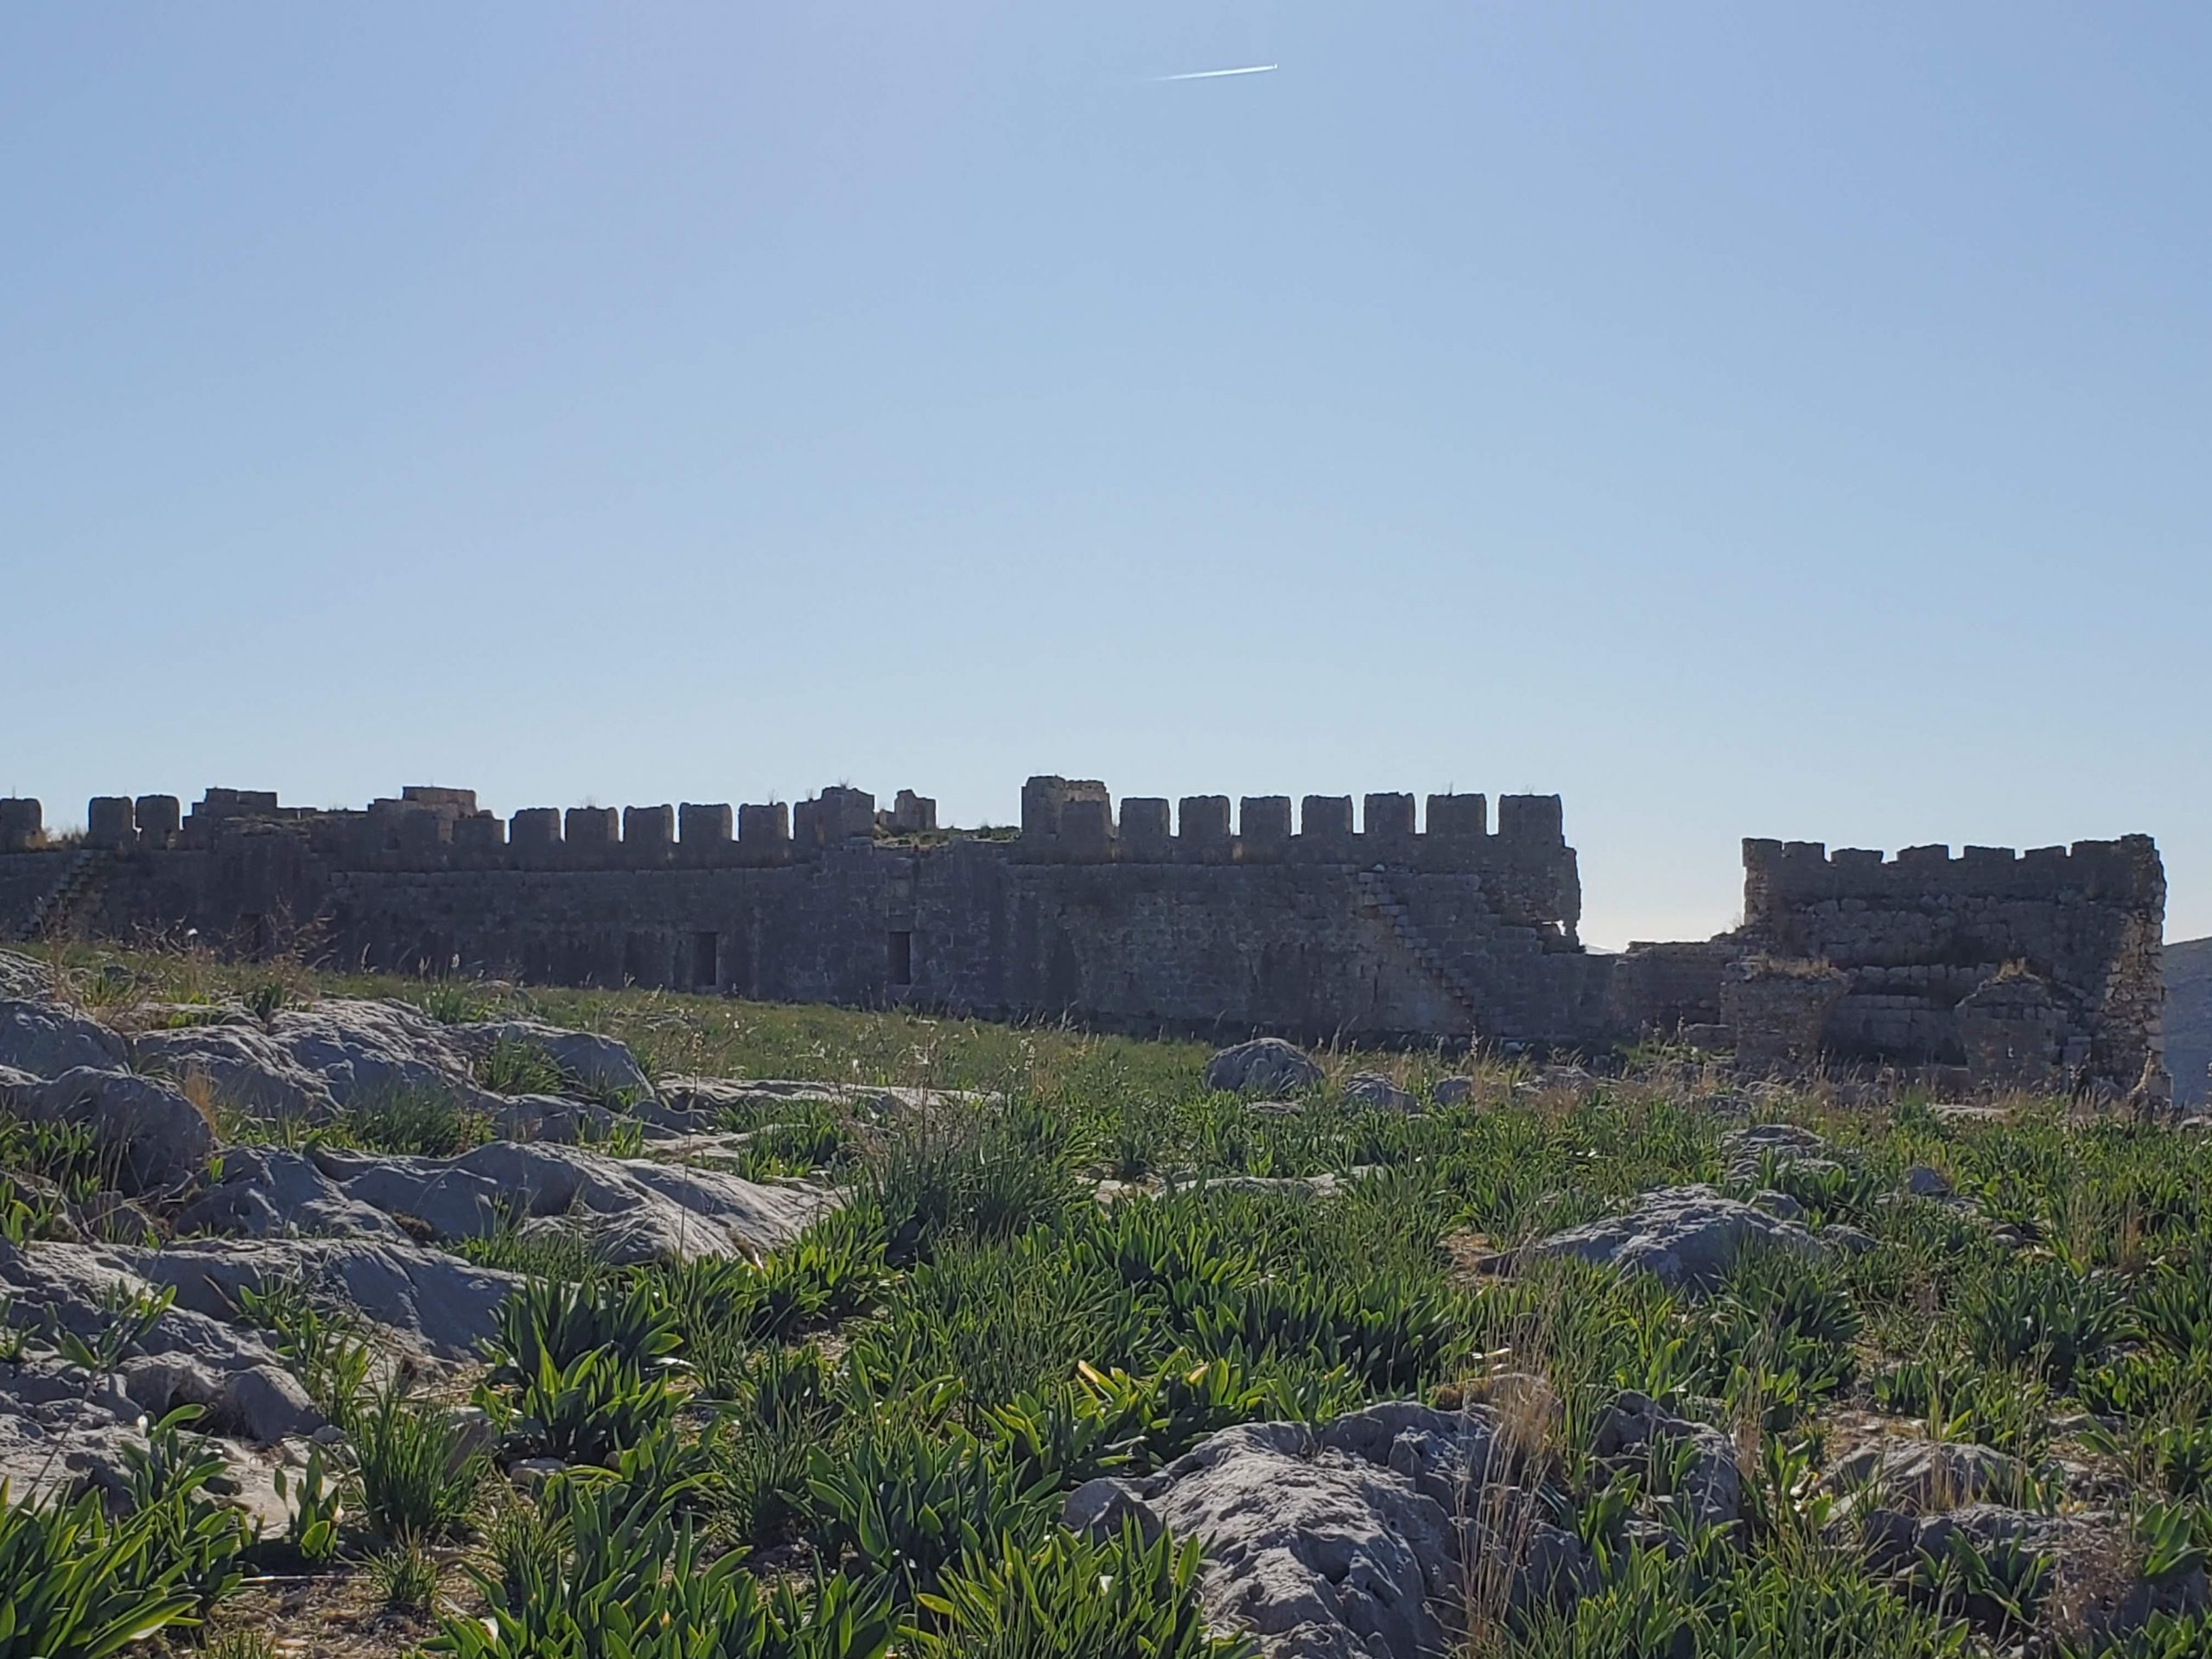 Anavarza Kalesi Ruins